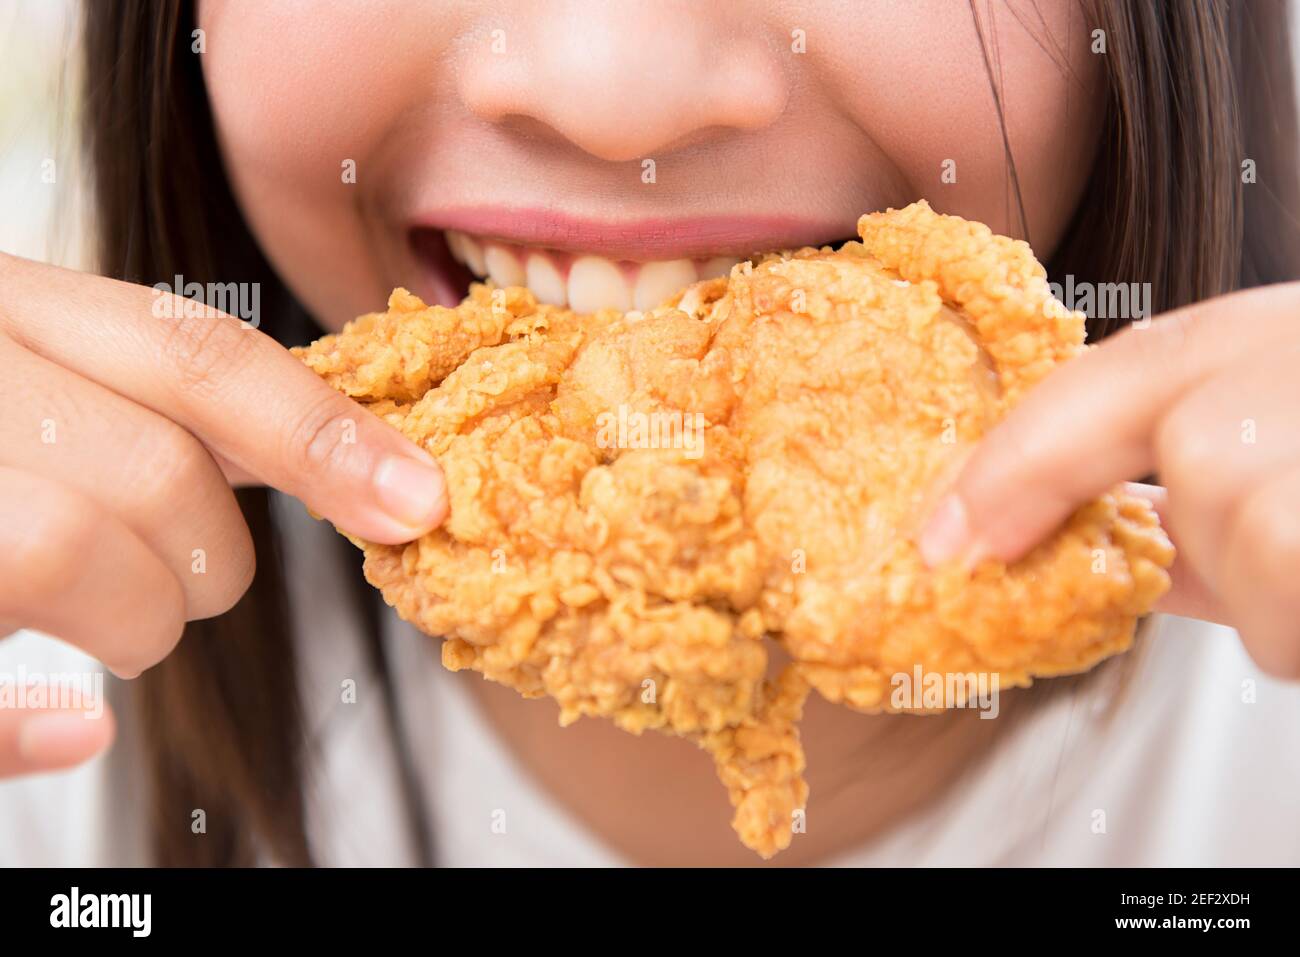 Junge Frau, die frittiertes Huhn isst - Nahaufnahme Stockfoto